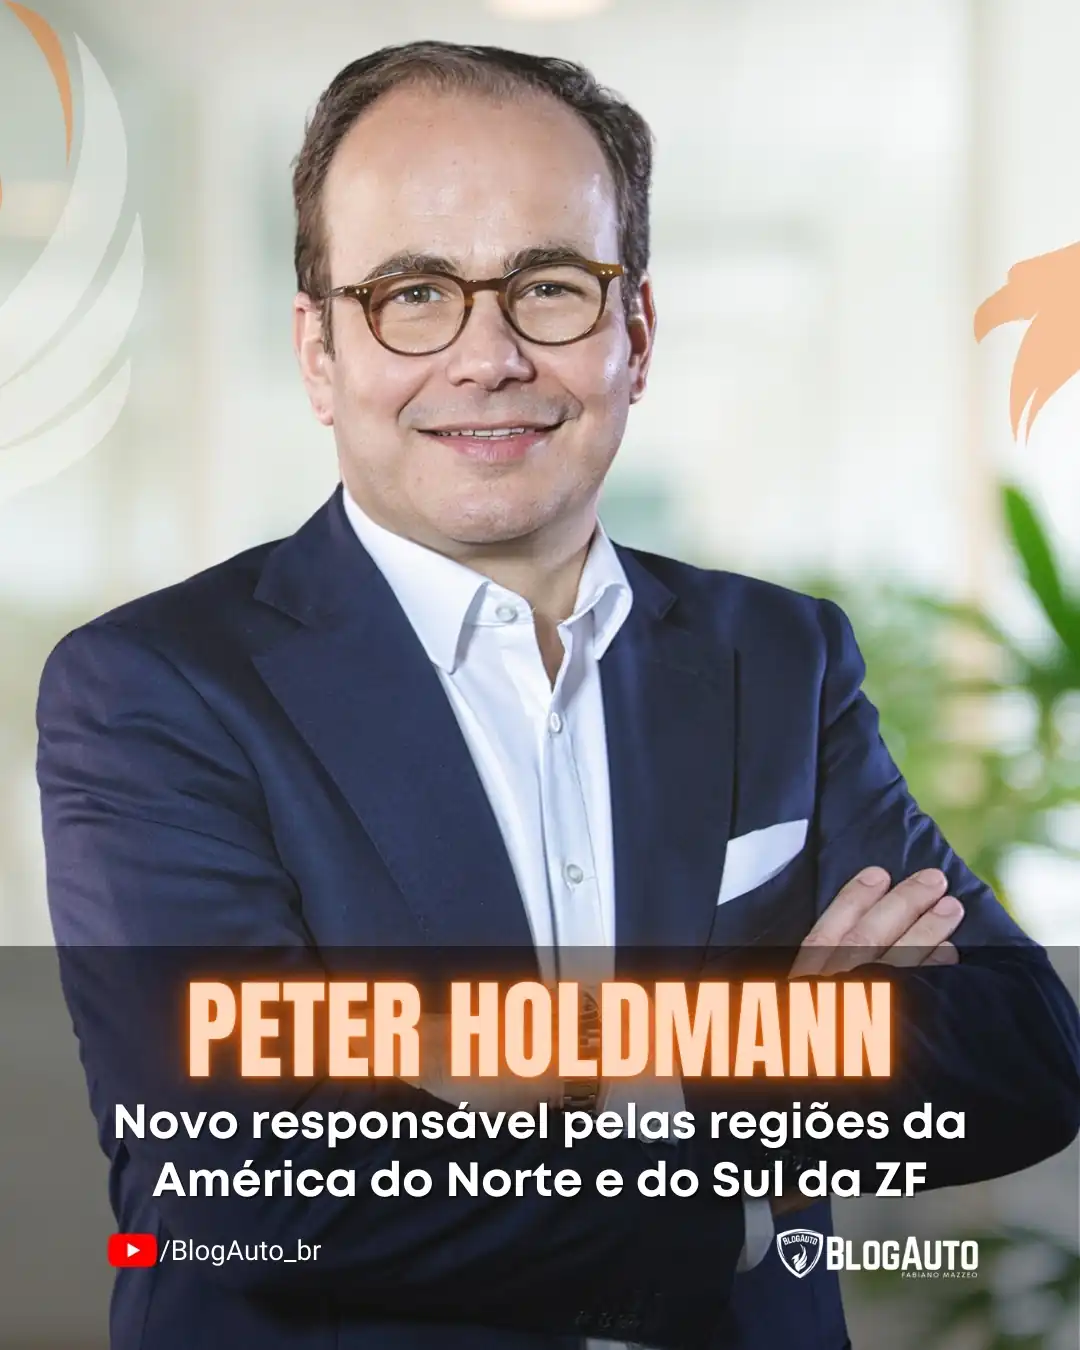 Peter HoldMann